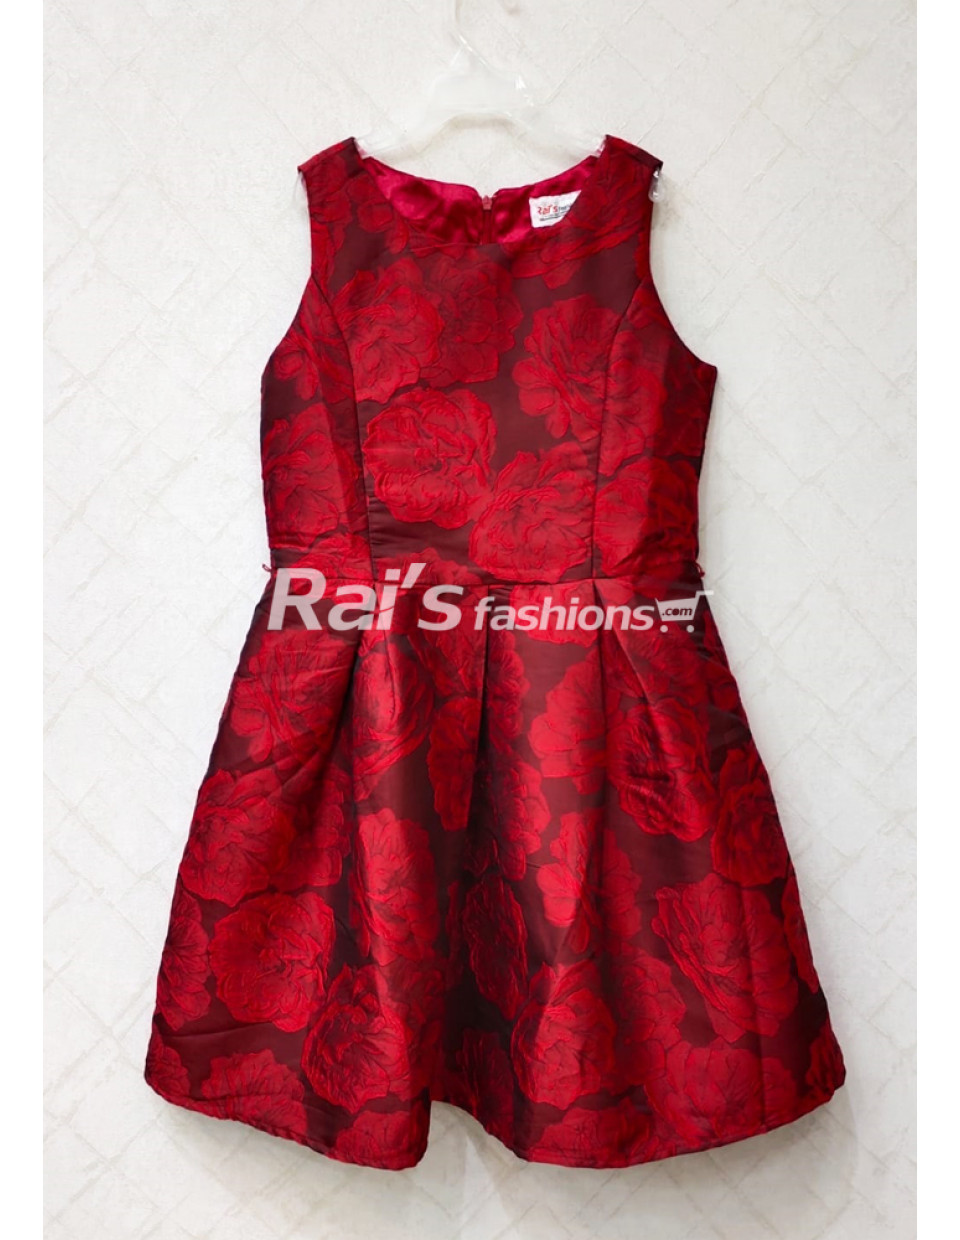 All Over Self Weaving Red Kids Dress (KRB2)